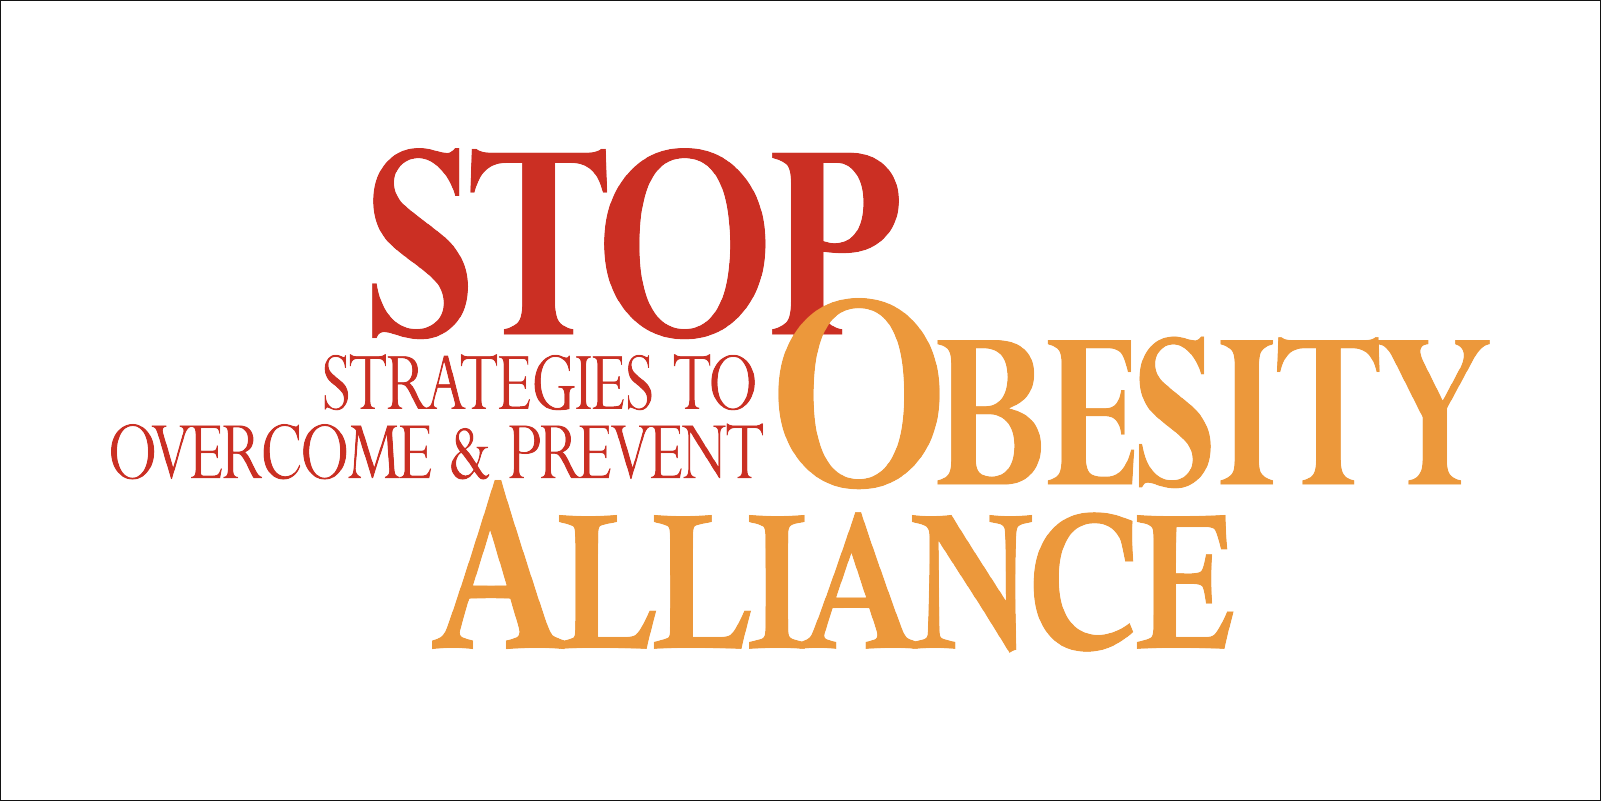 STOP Obesity Alliance